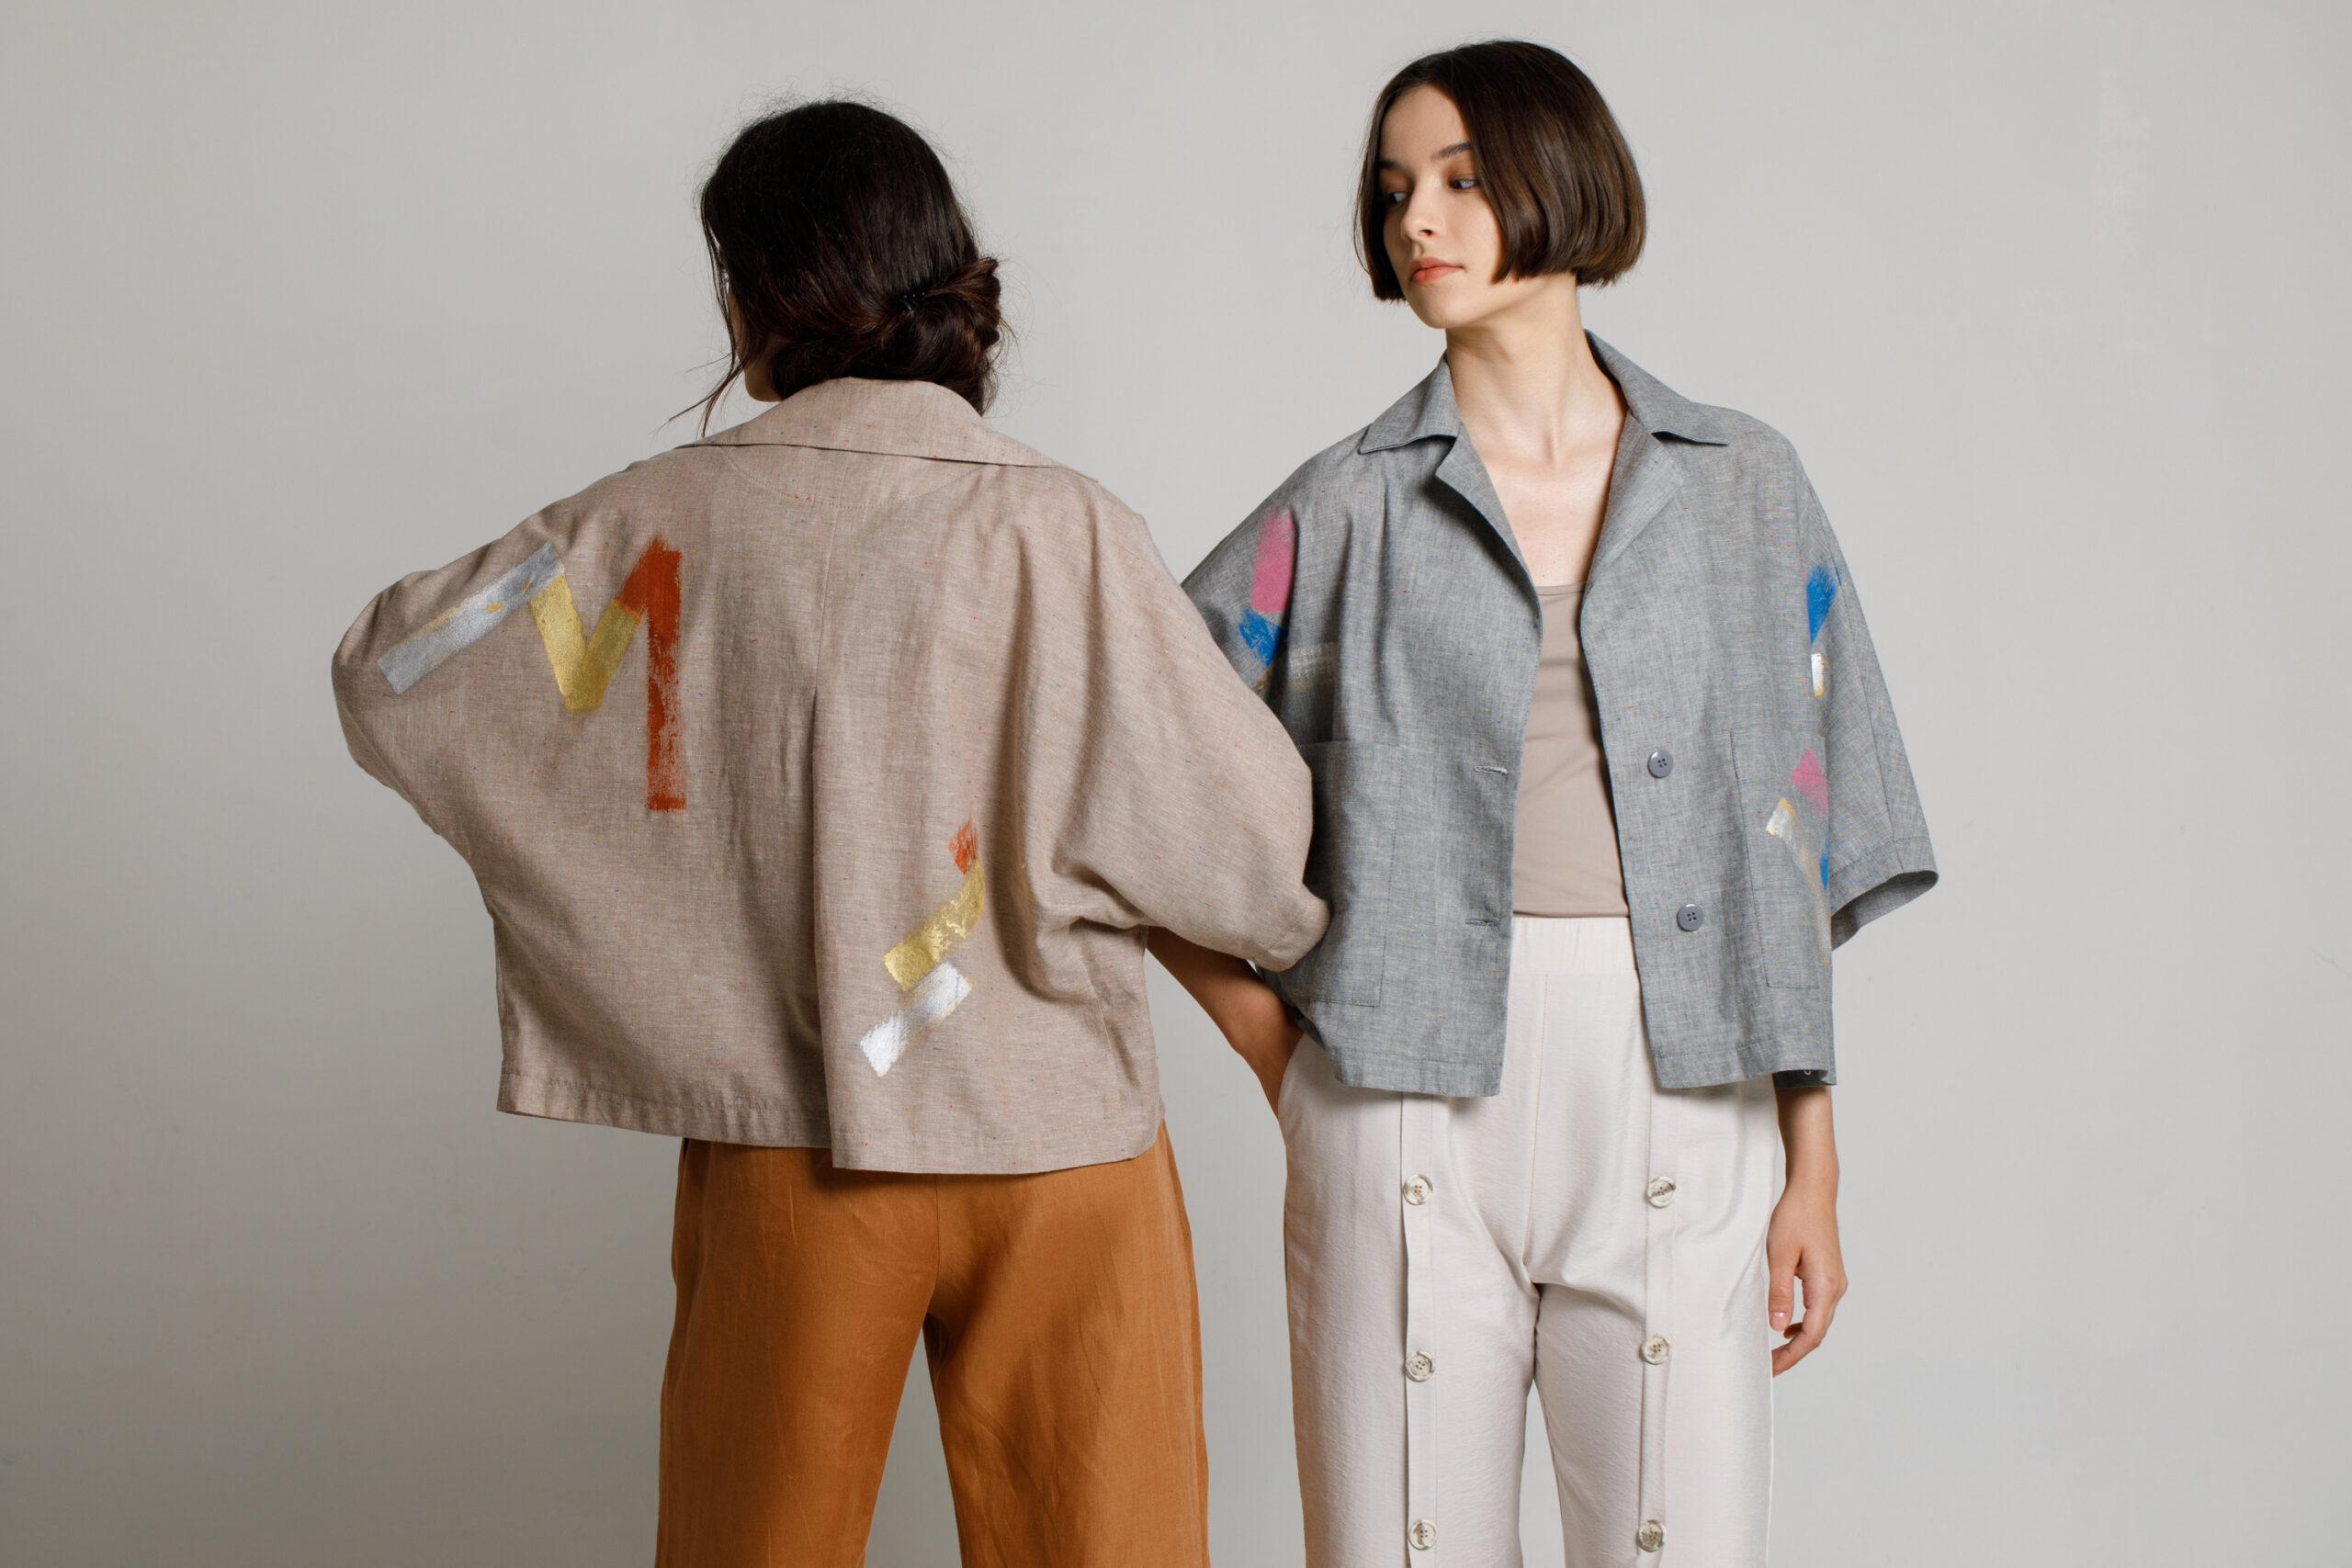 KIT casual beige poplin jacket HAND PAINTED. Natural fabrics, original design, handmade embroidery